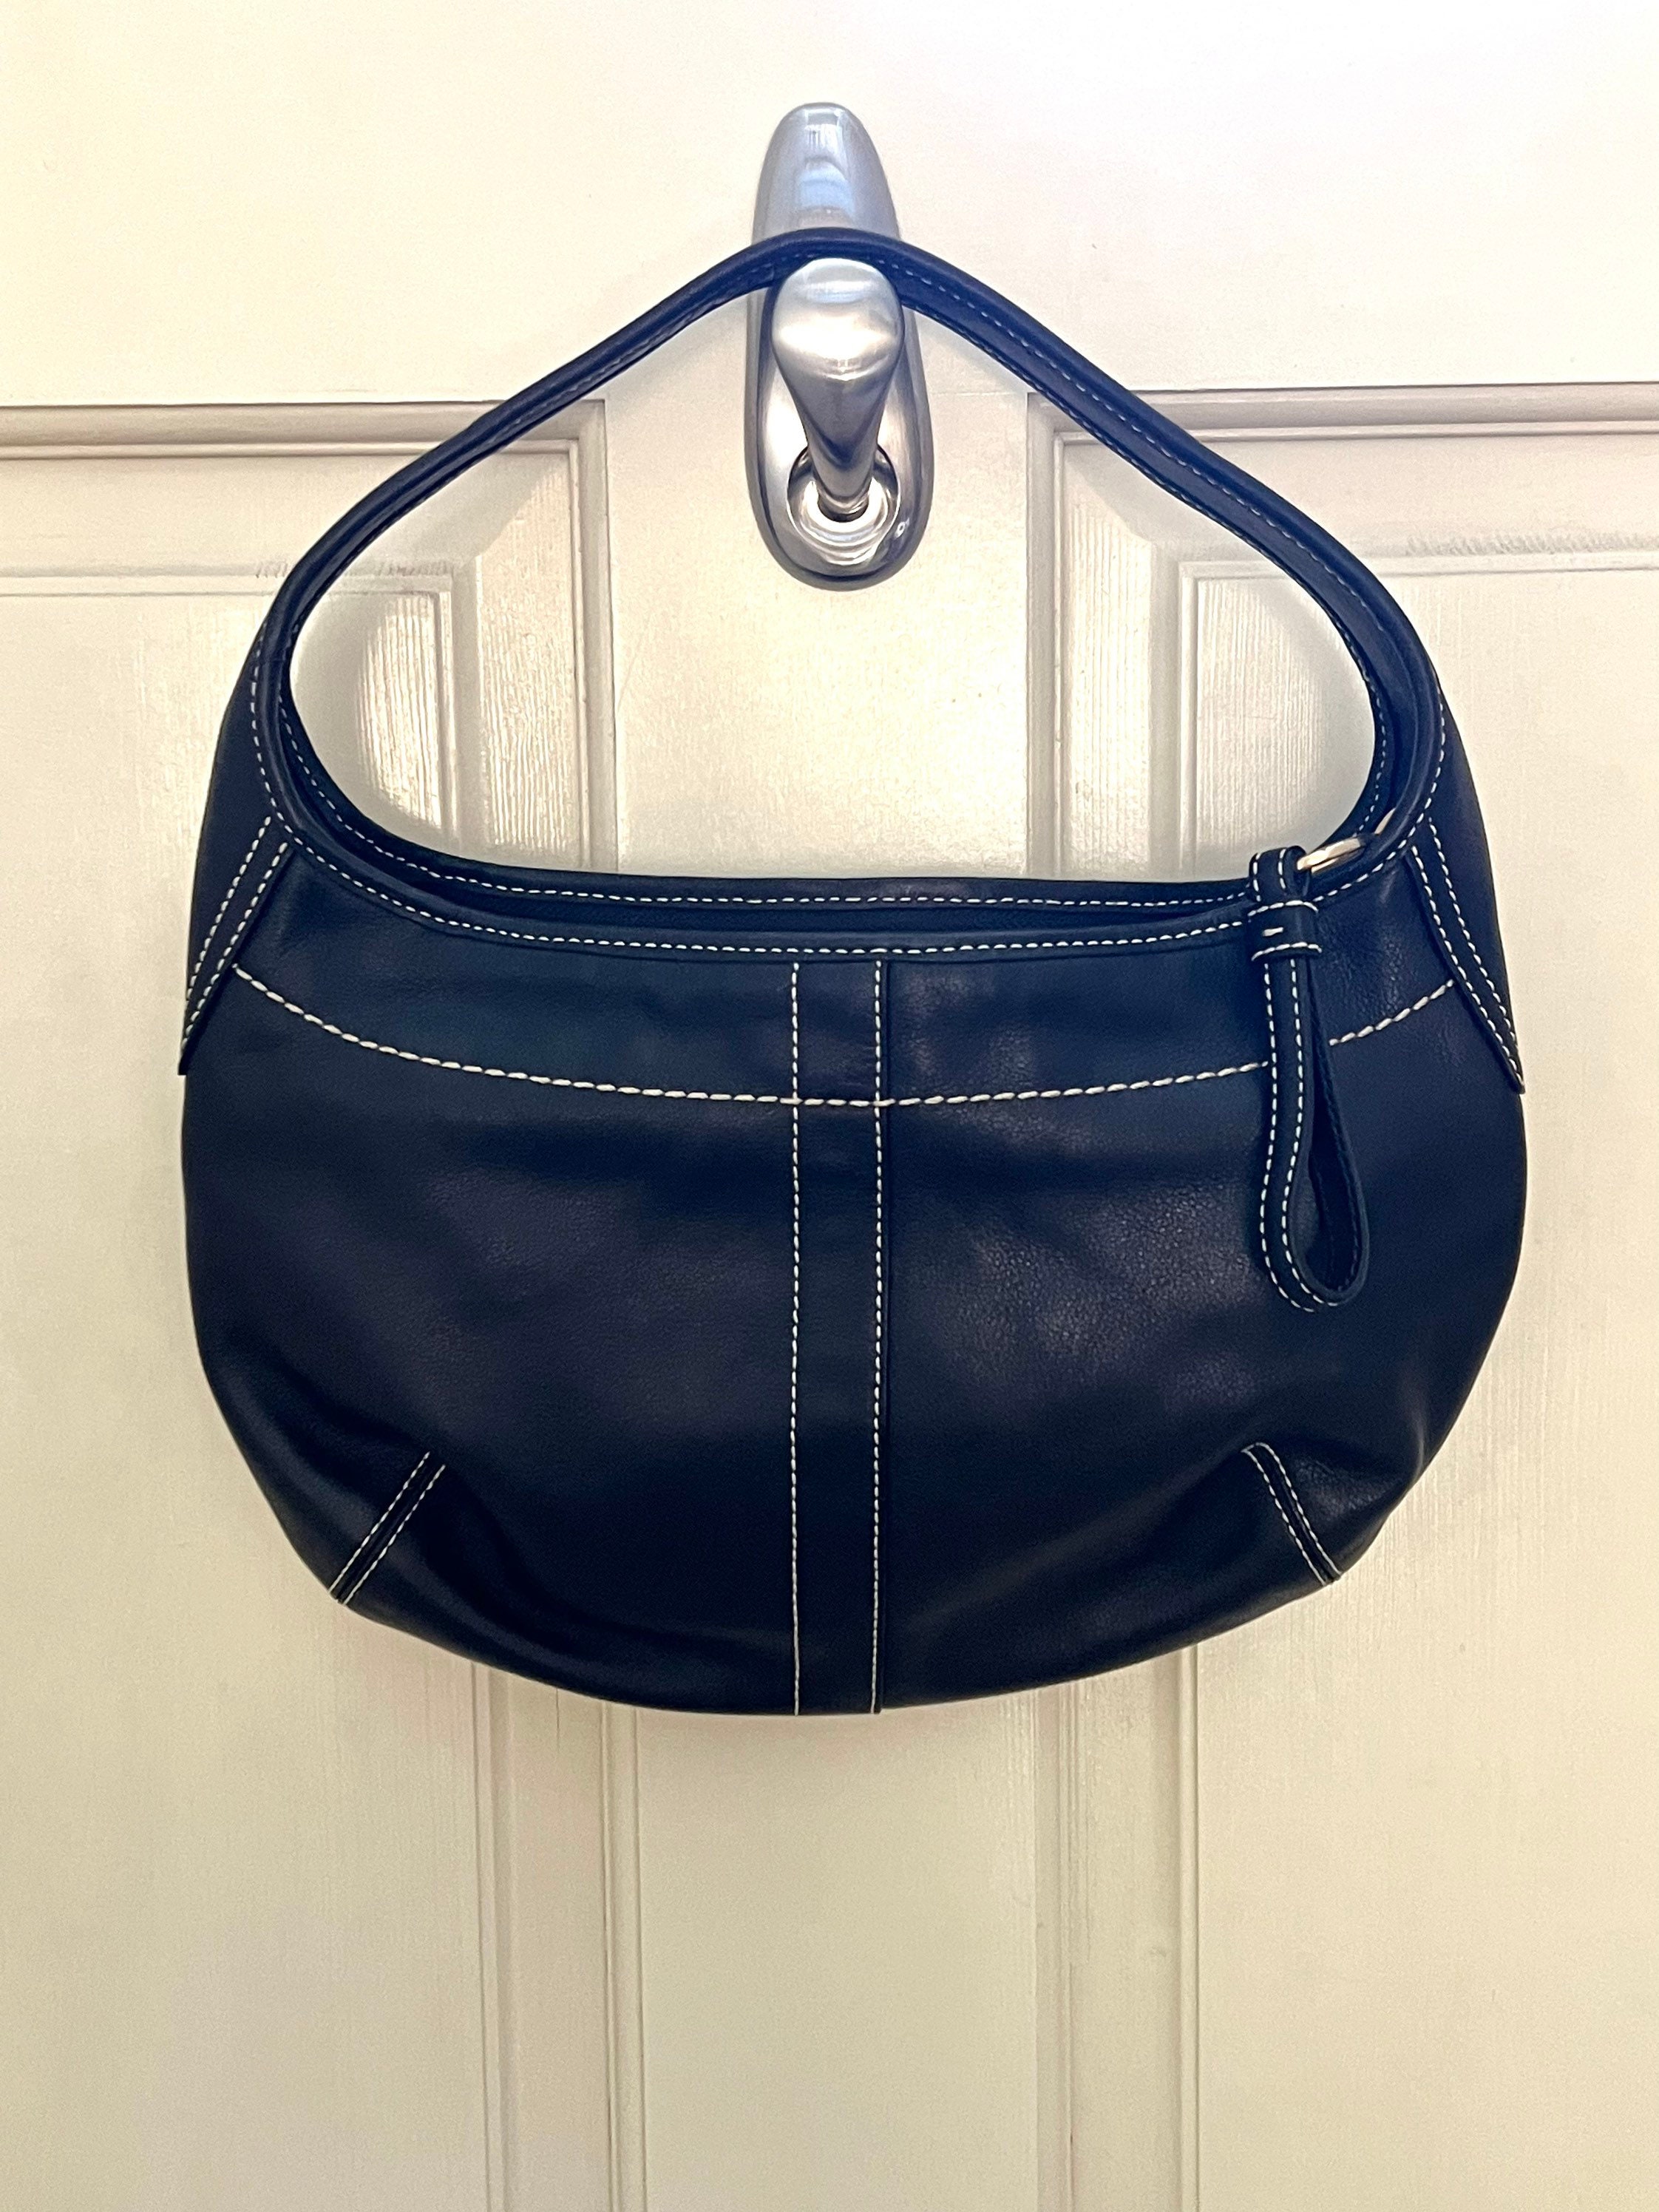 The Sak Authentic leather handbag off white / egg shell